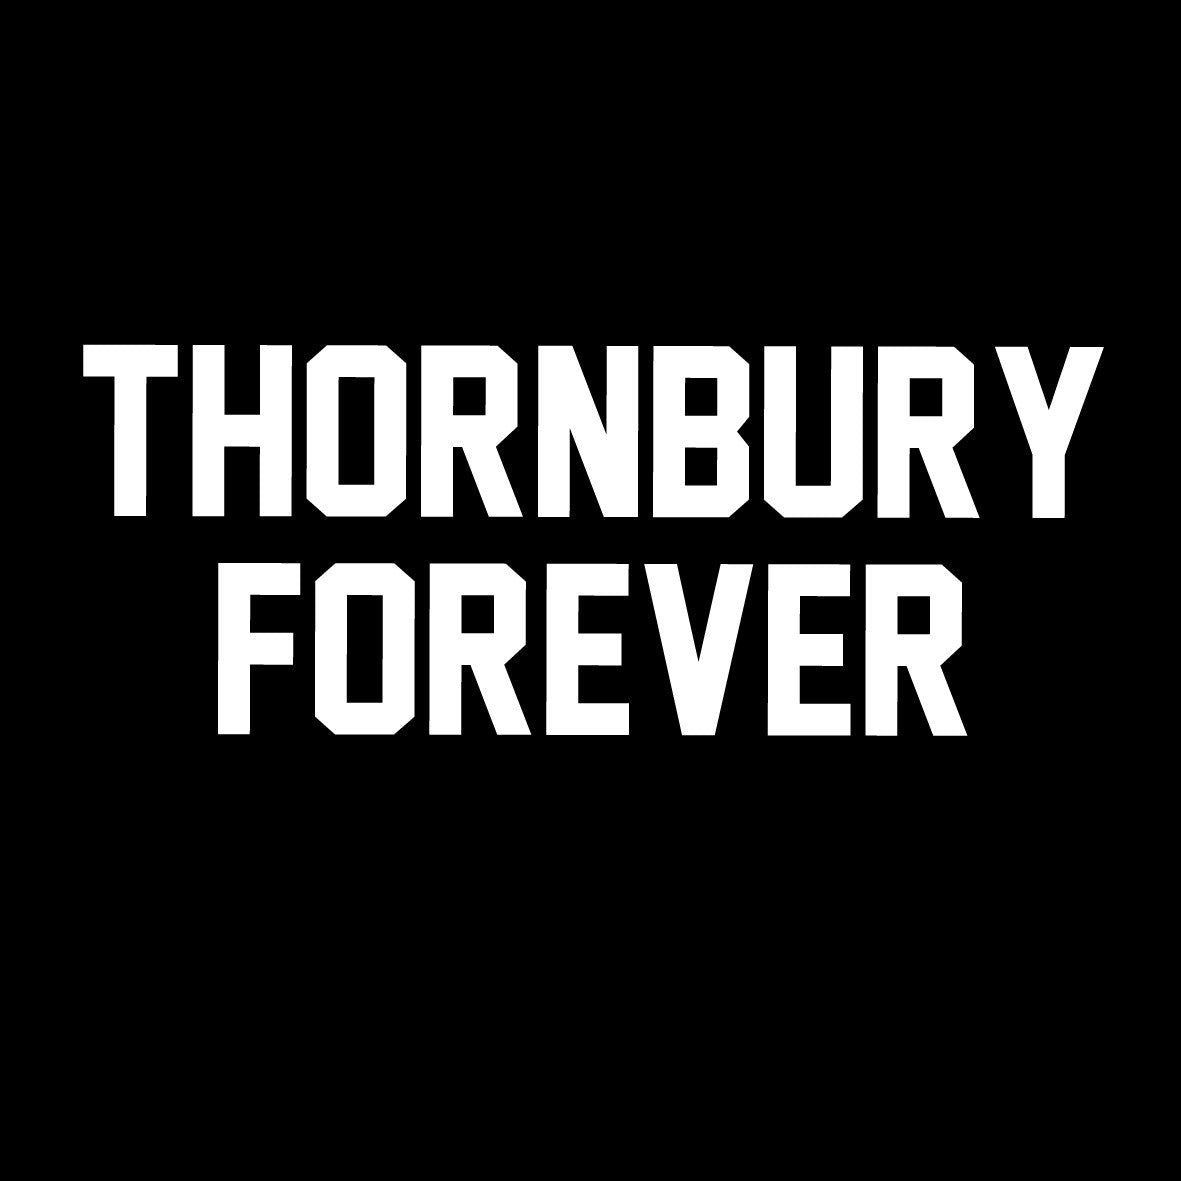 Thornbury Forever